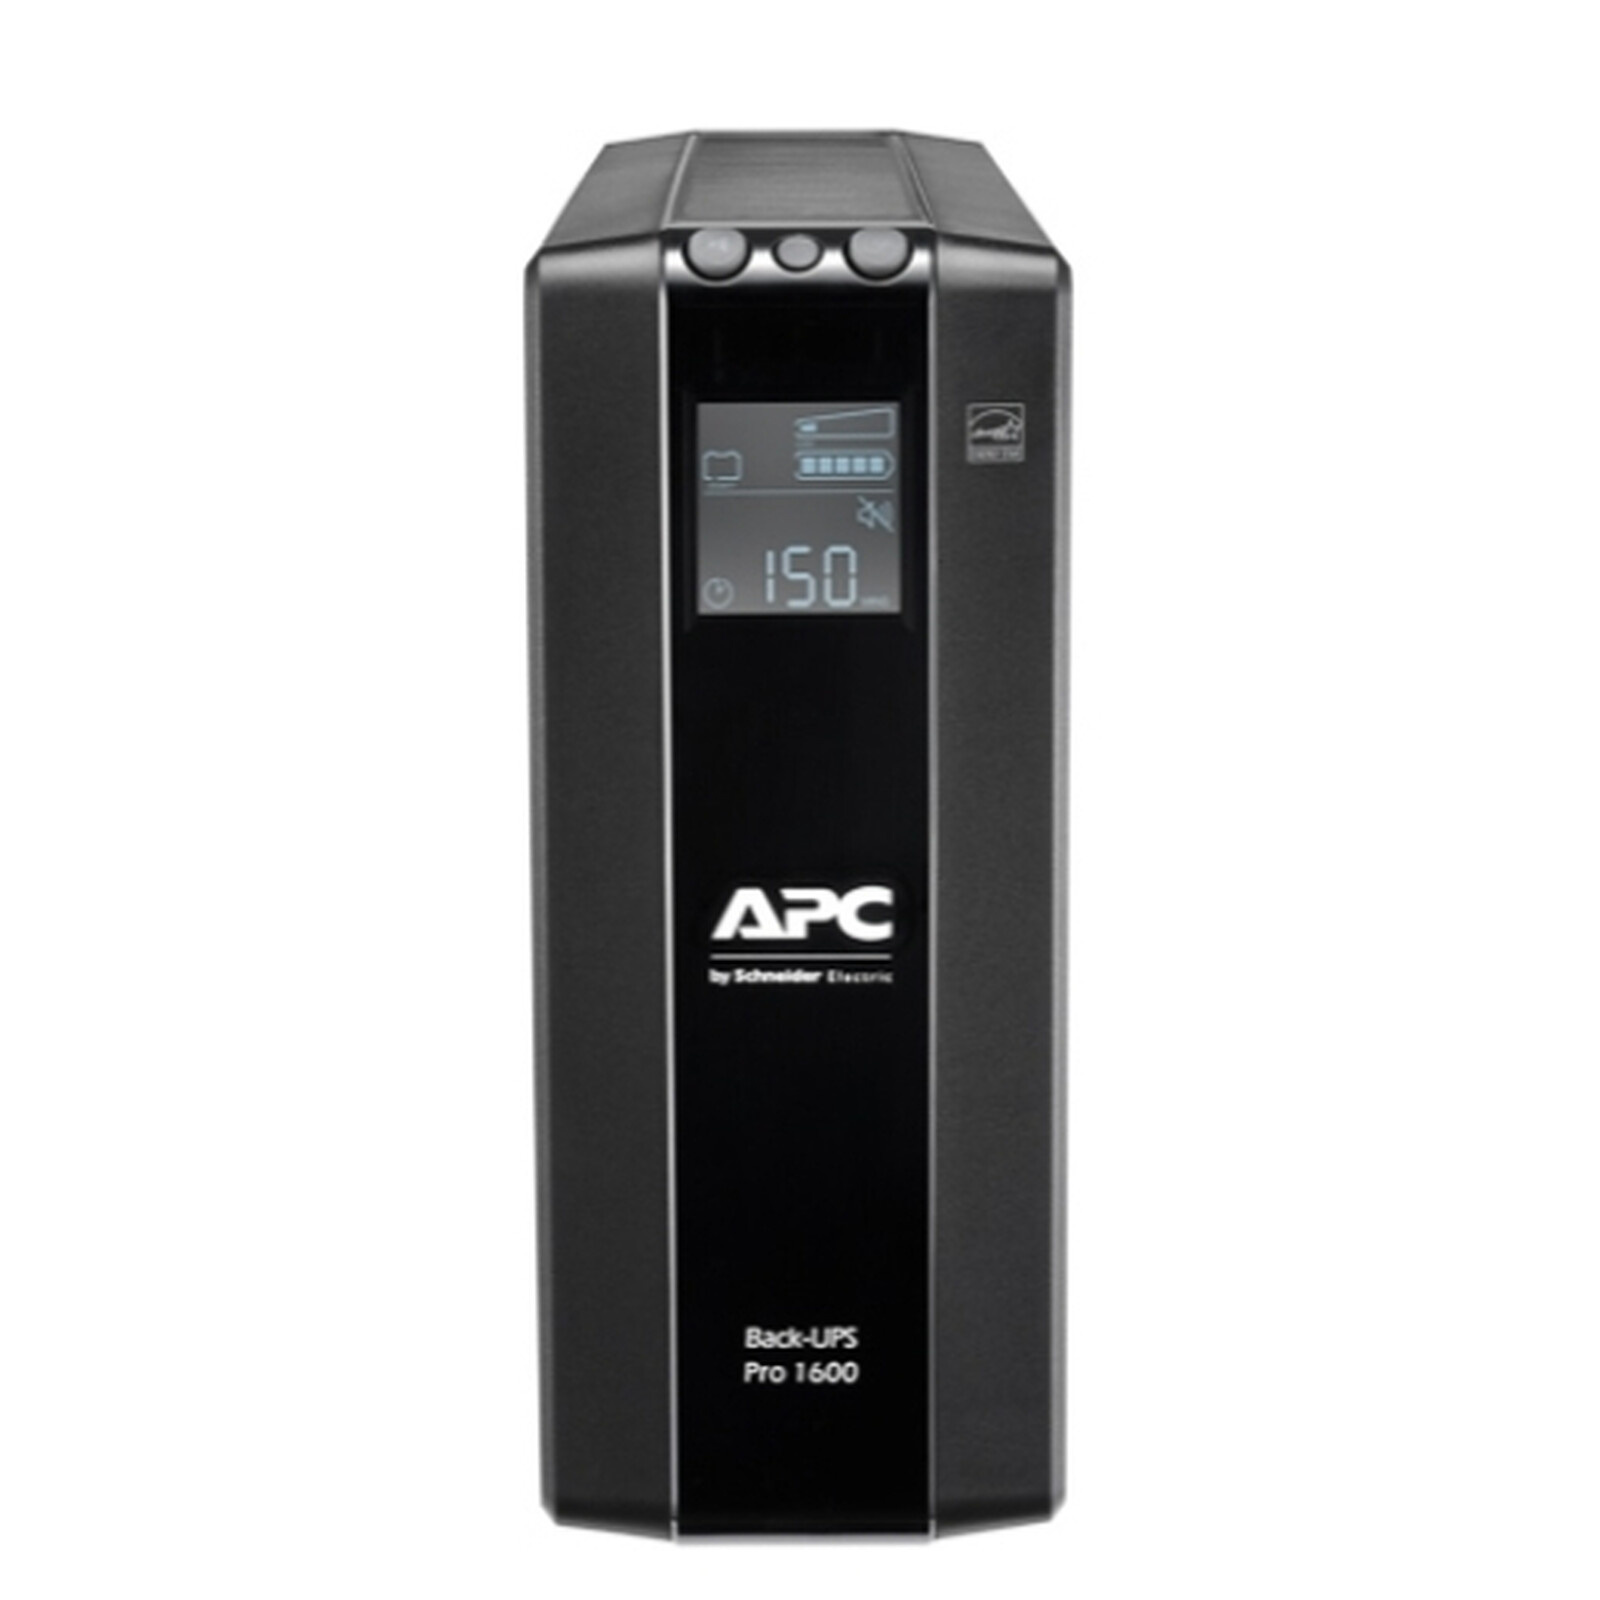 APC Back-UPS Pro BR 1600VA Power inverter LDLC 3-year warranty